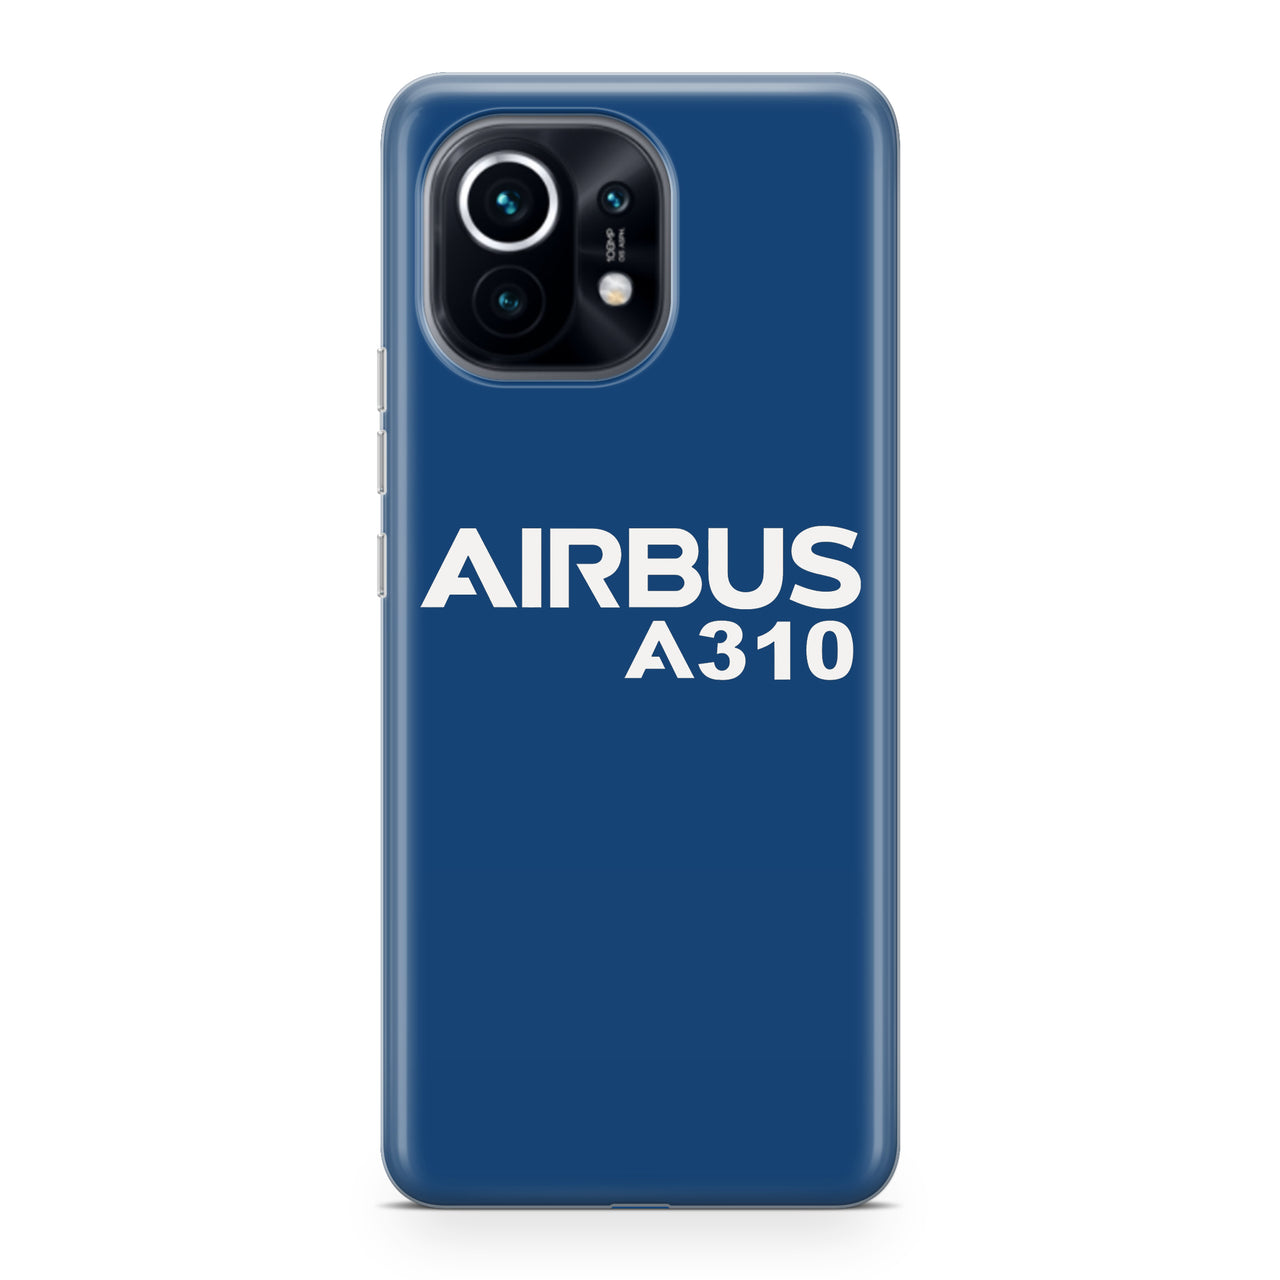 Airbus A310 & Text Designed Xiaomi Cases